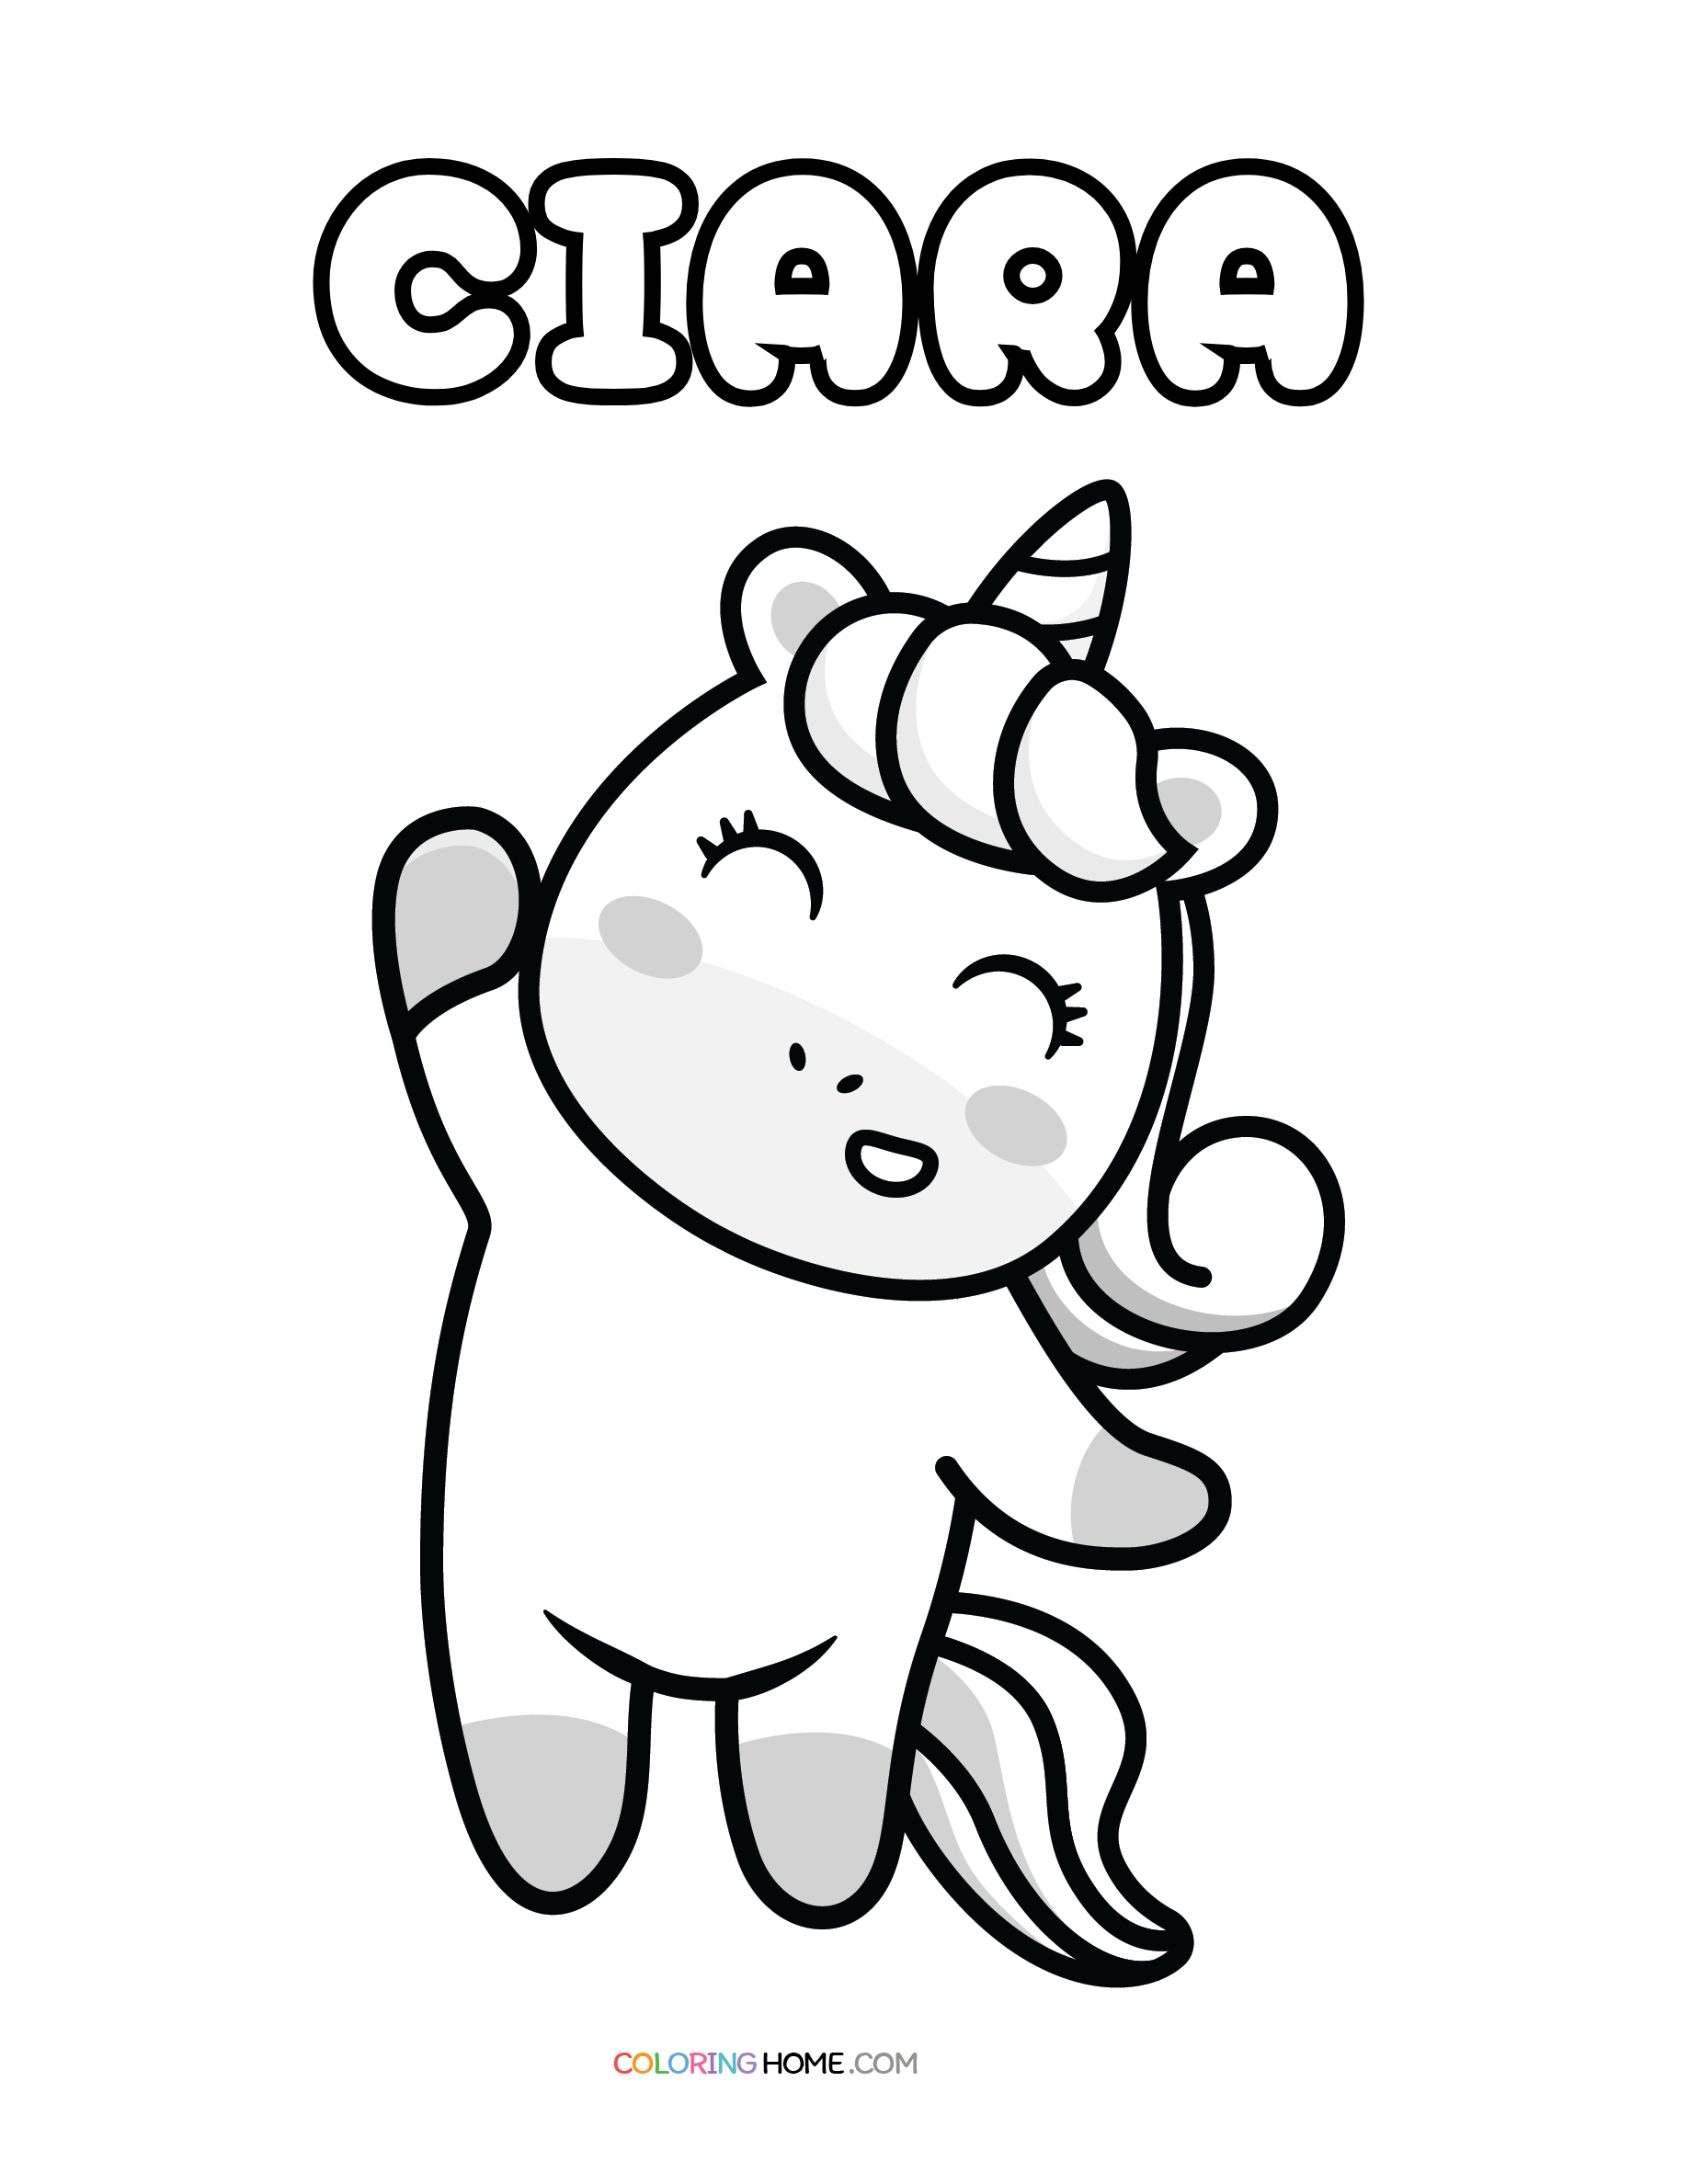 Ciara unicorn coloring page